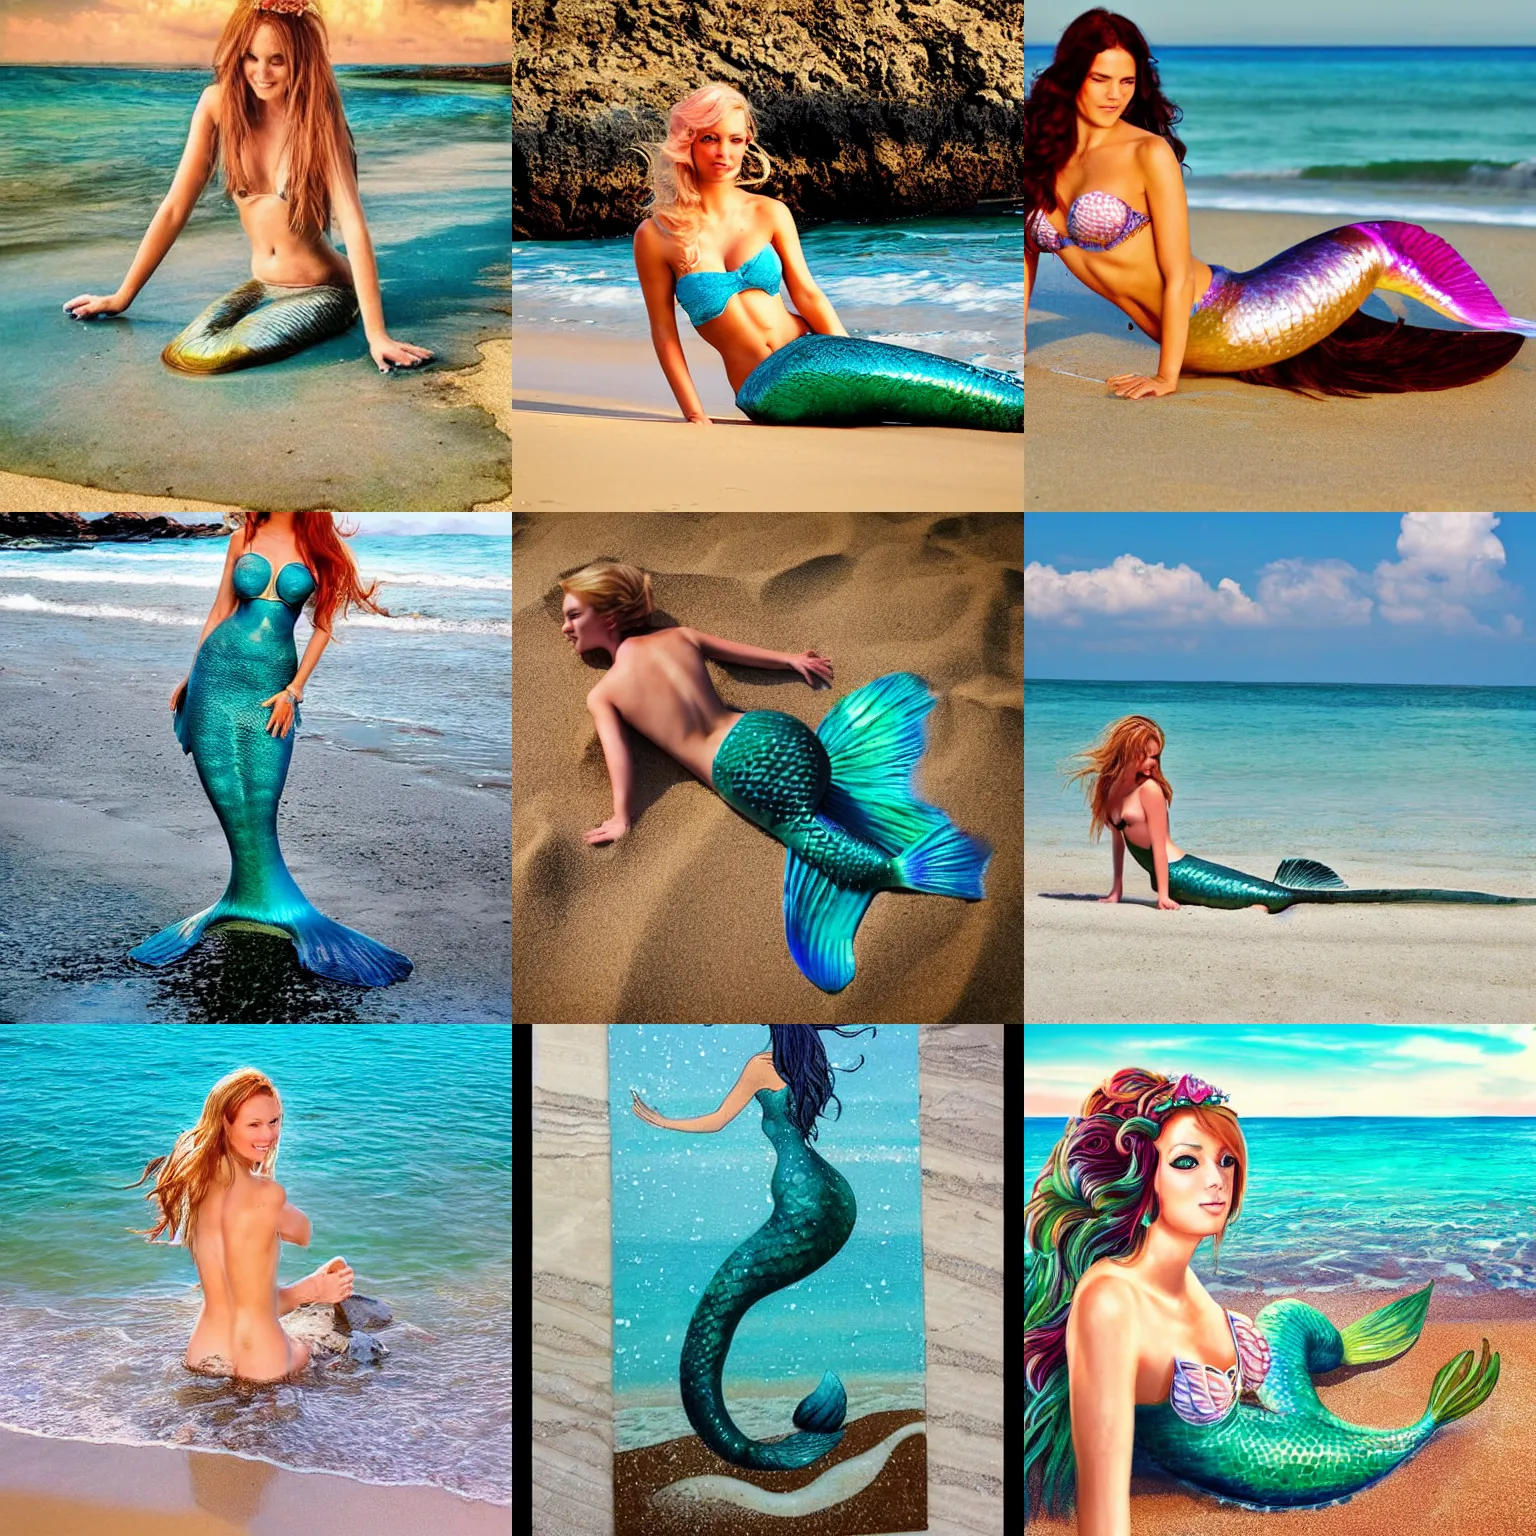 Prompt: beautiful mermaid on a beach